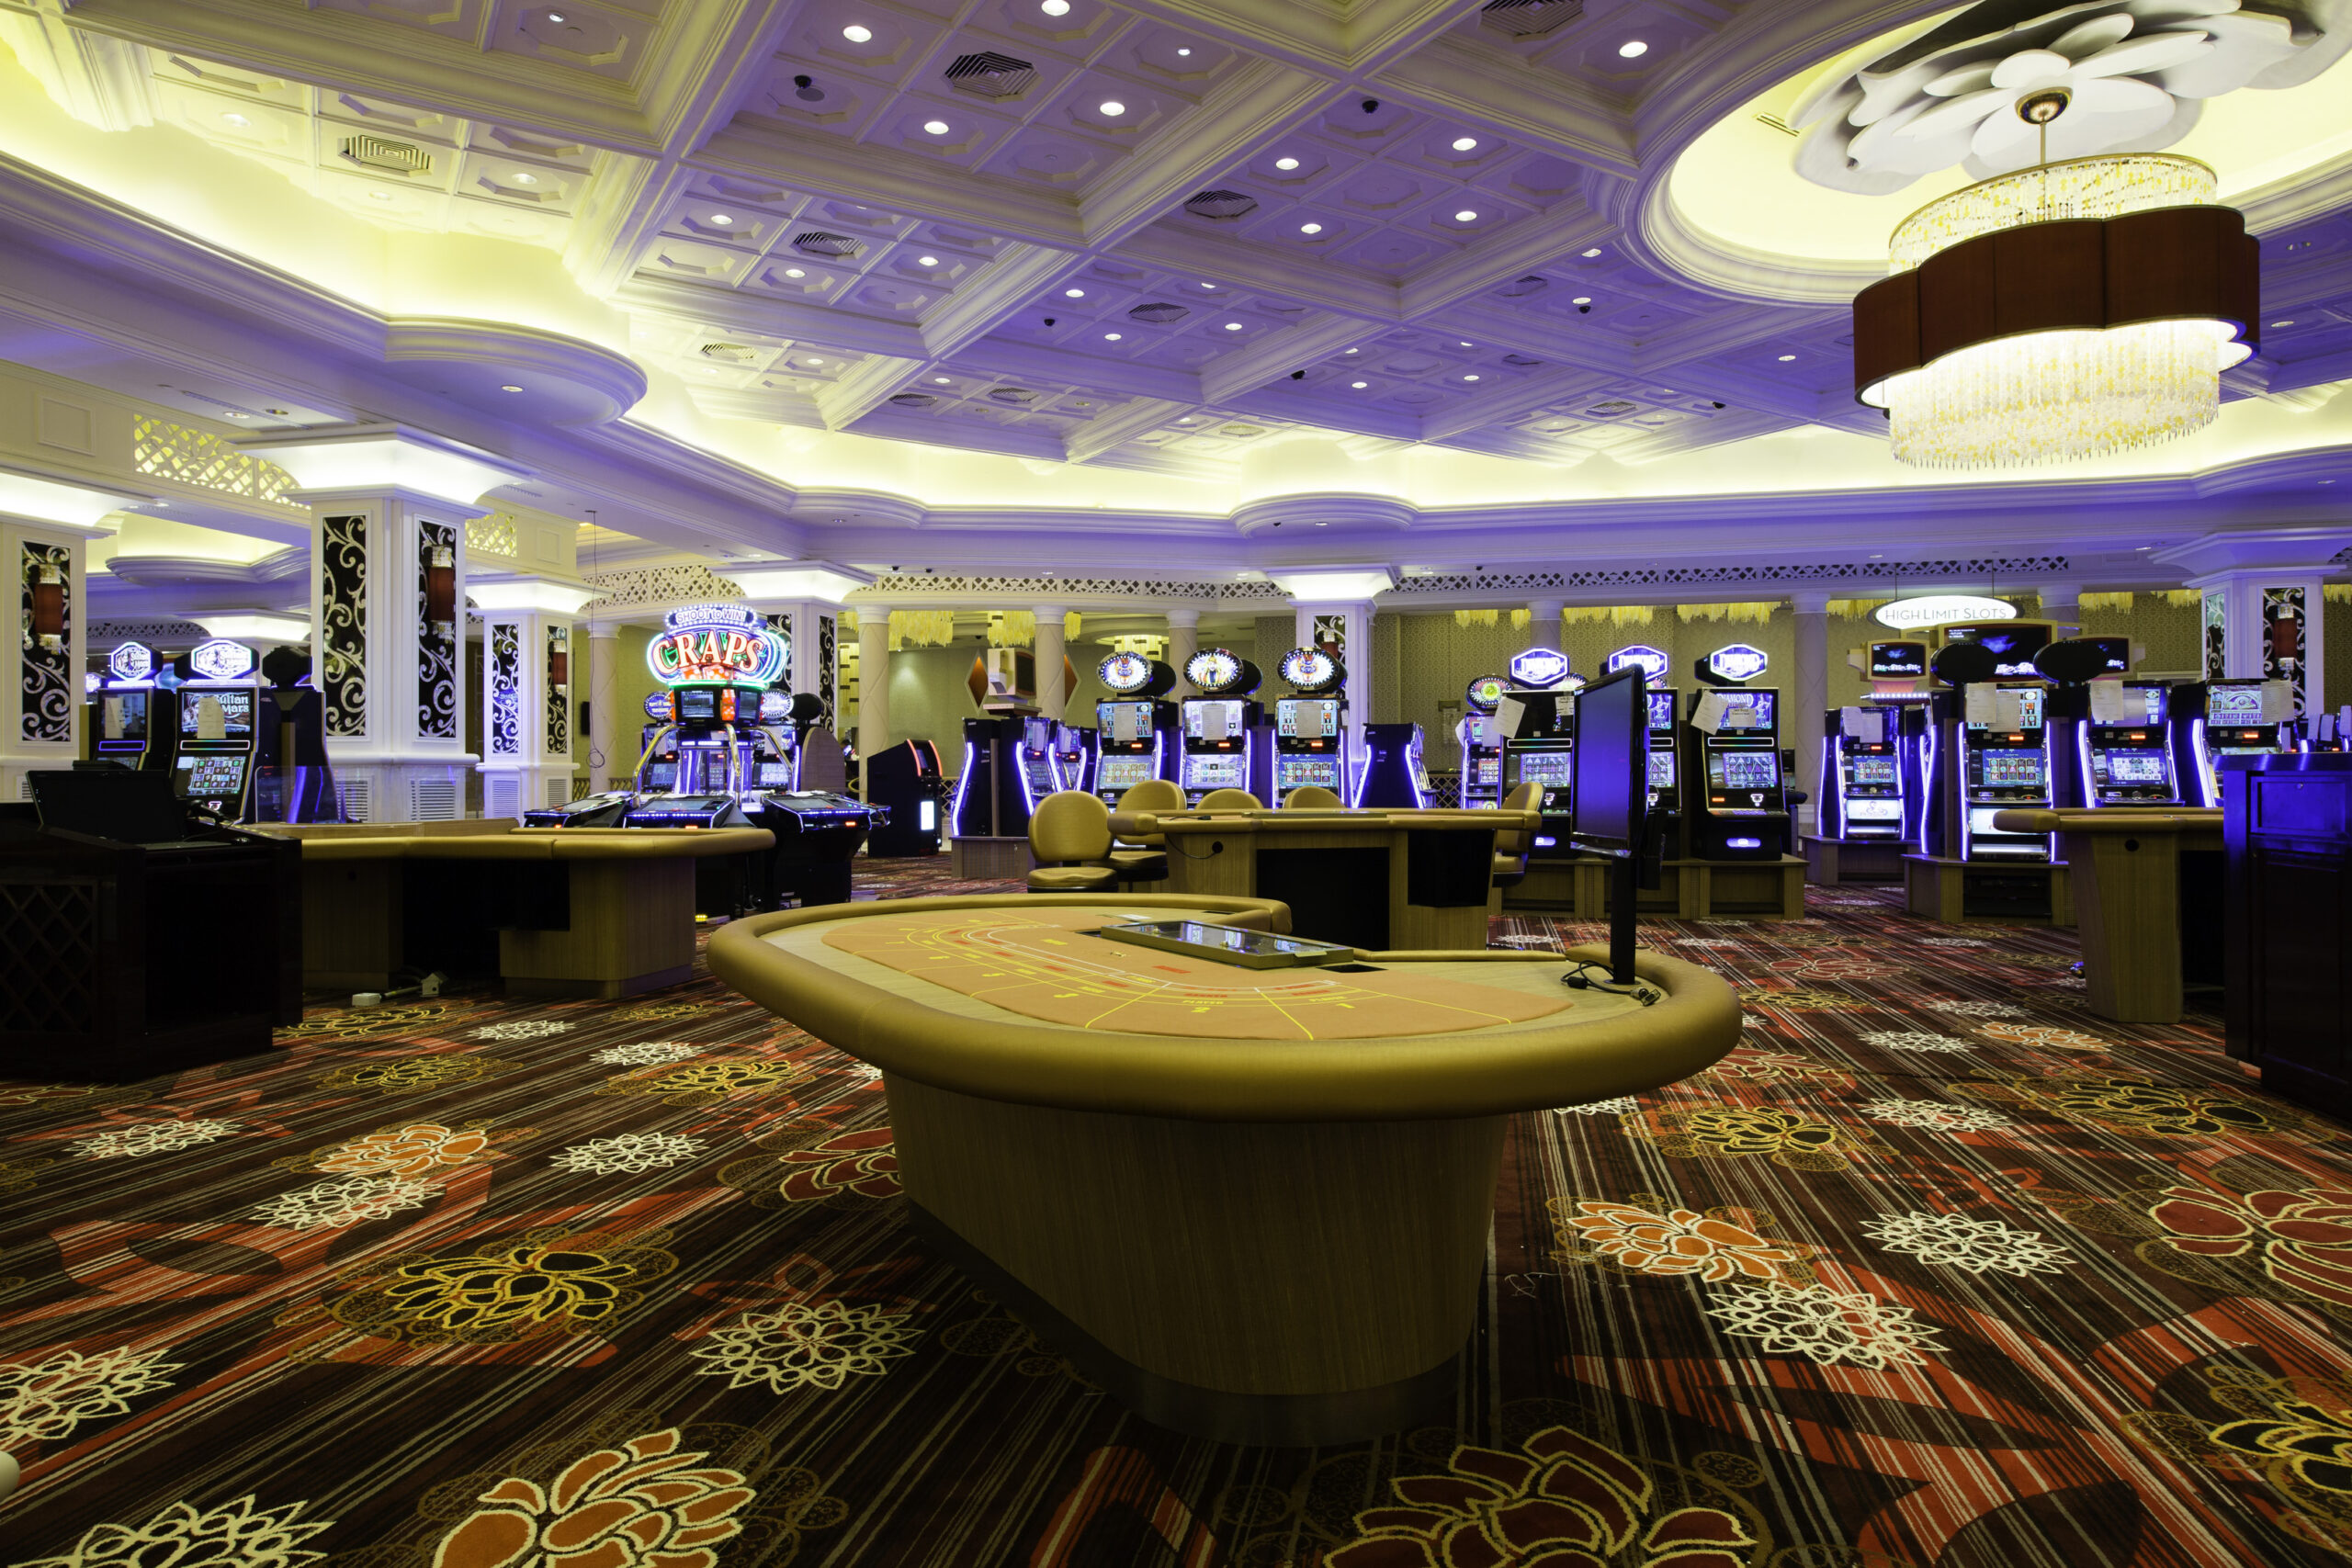 The Grand Hồ Tràm Casino